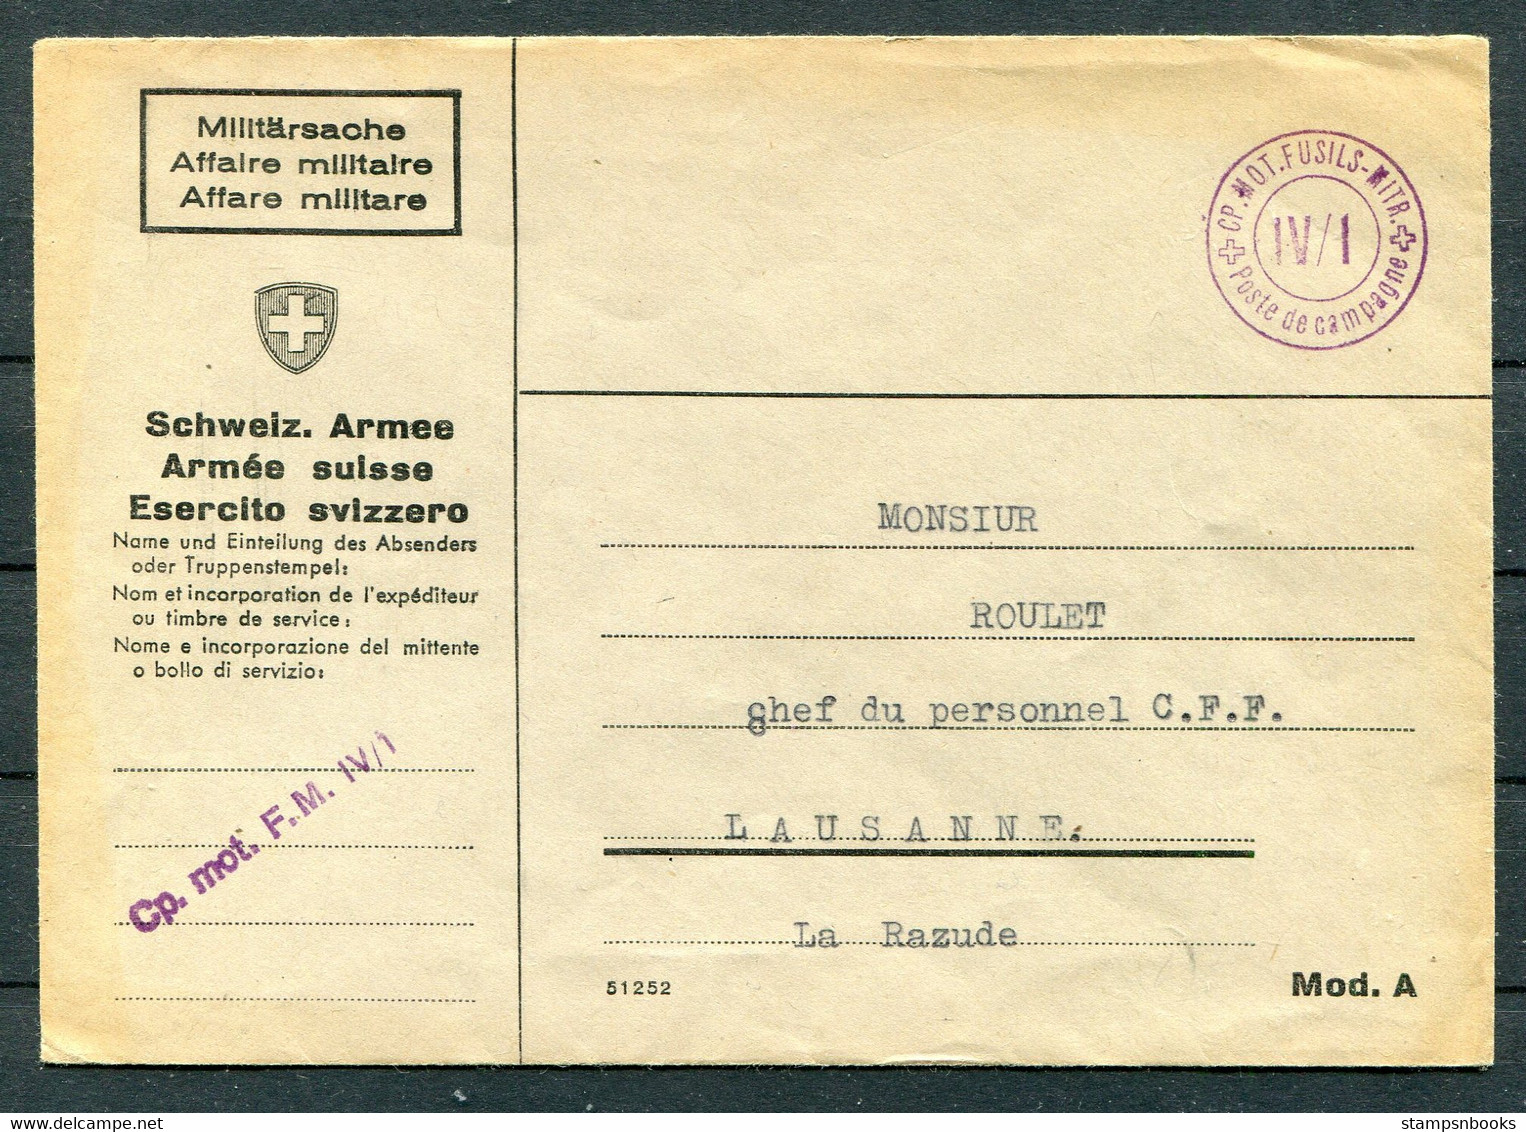 WW2 Switzerland Feldpost Fieldpost Cover M.O.T. FUSILS MITR. - Monsiur Roulet, Chef Du Personnel C.F.F. Lausanne - Postmarks